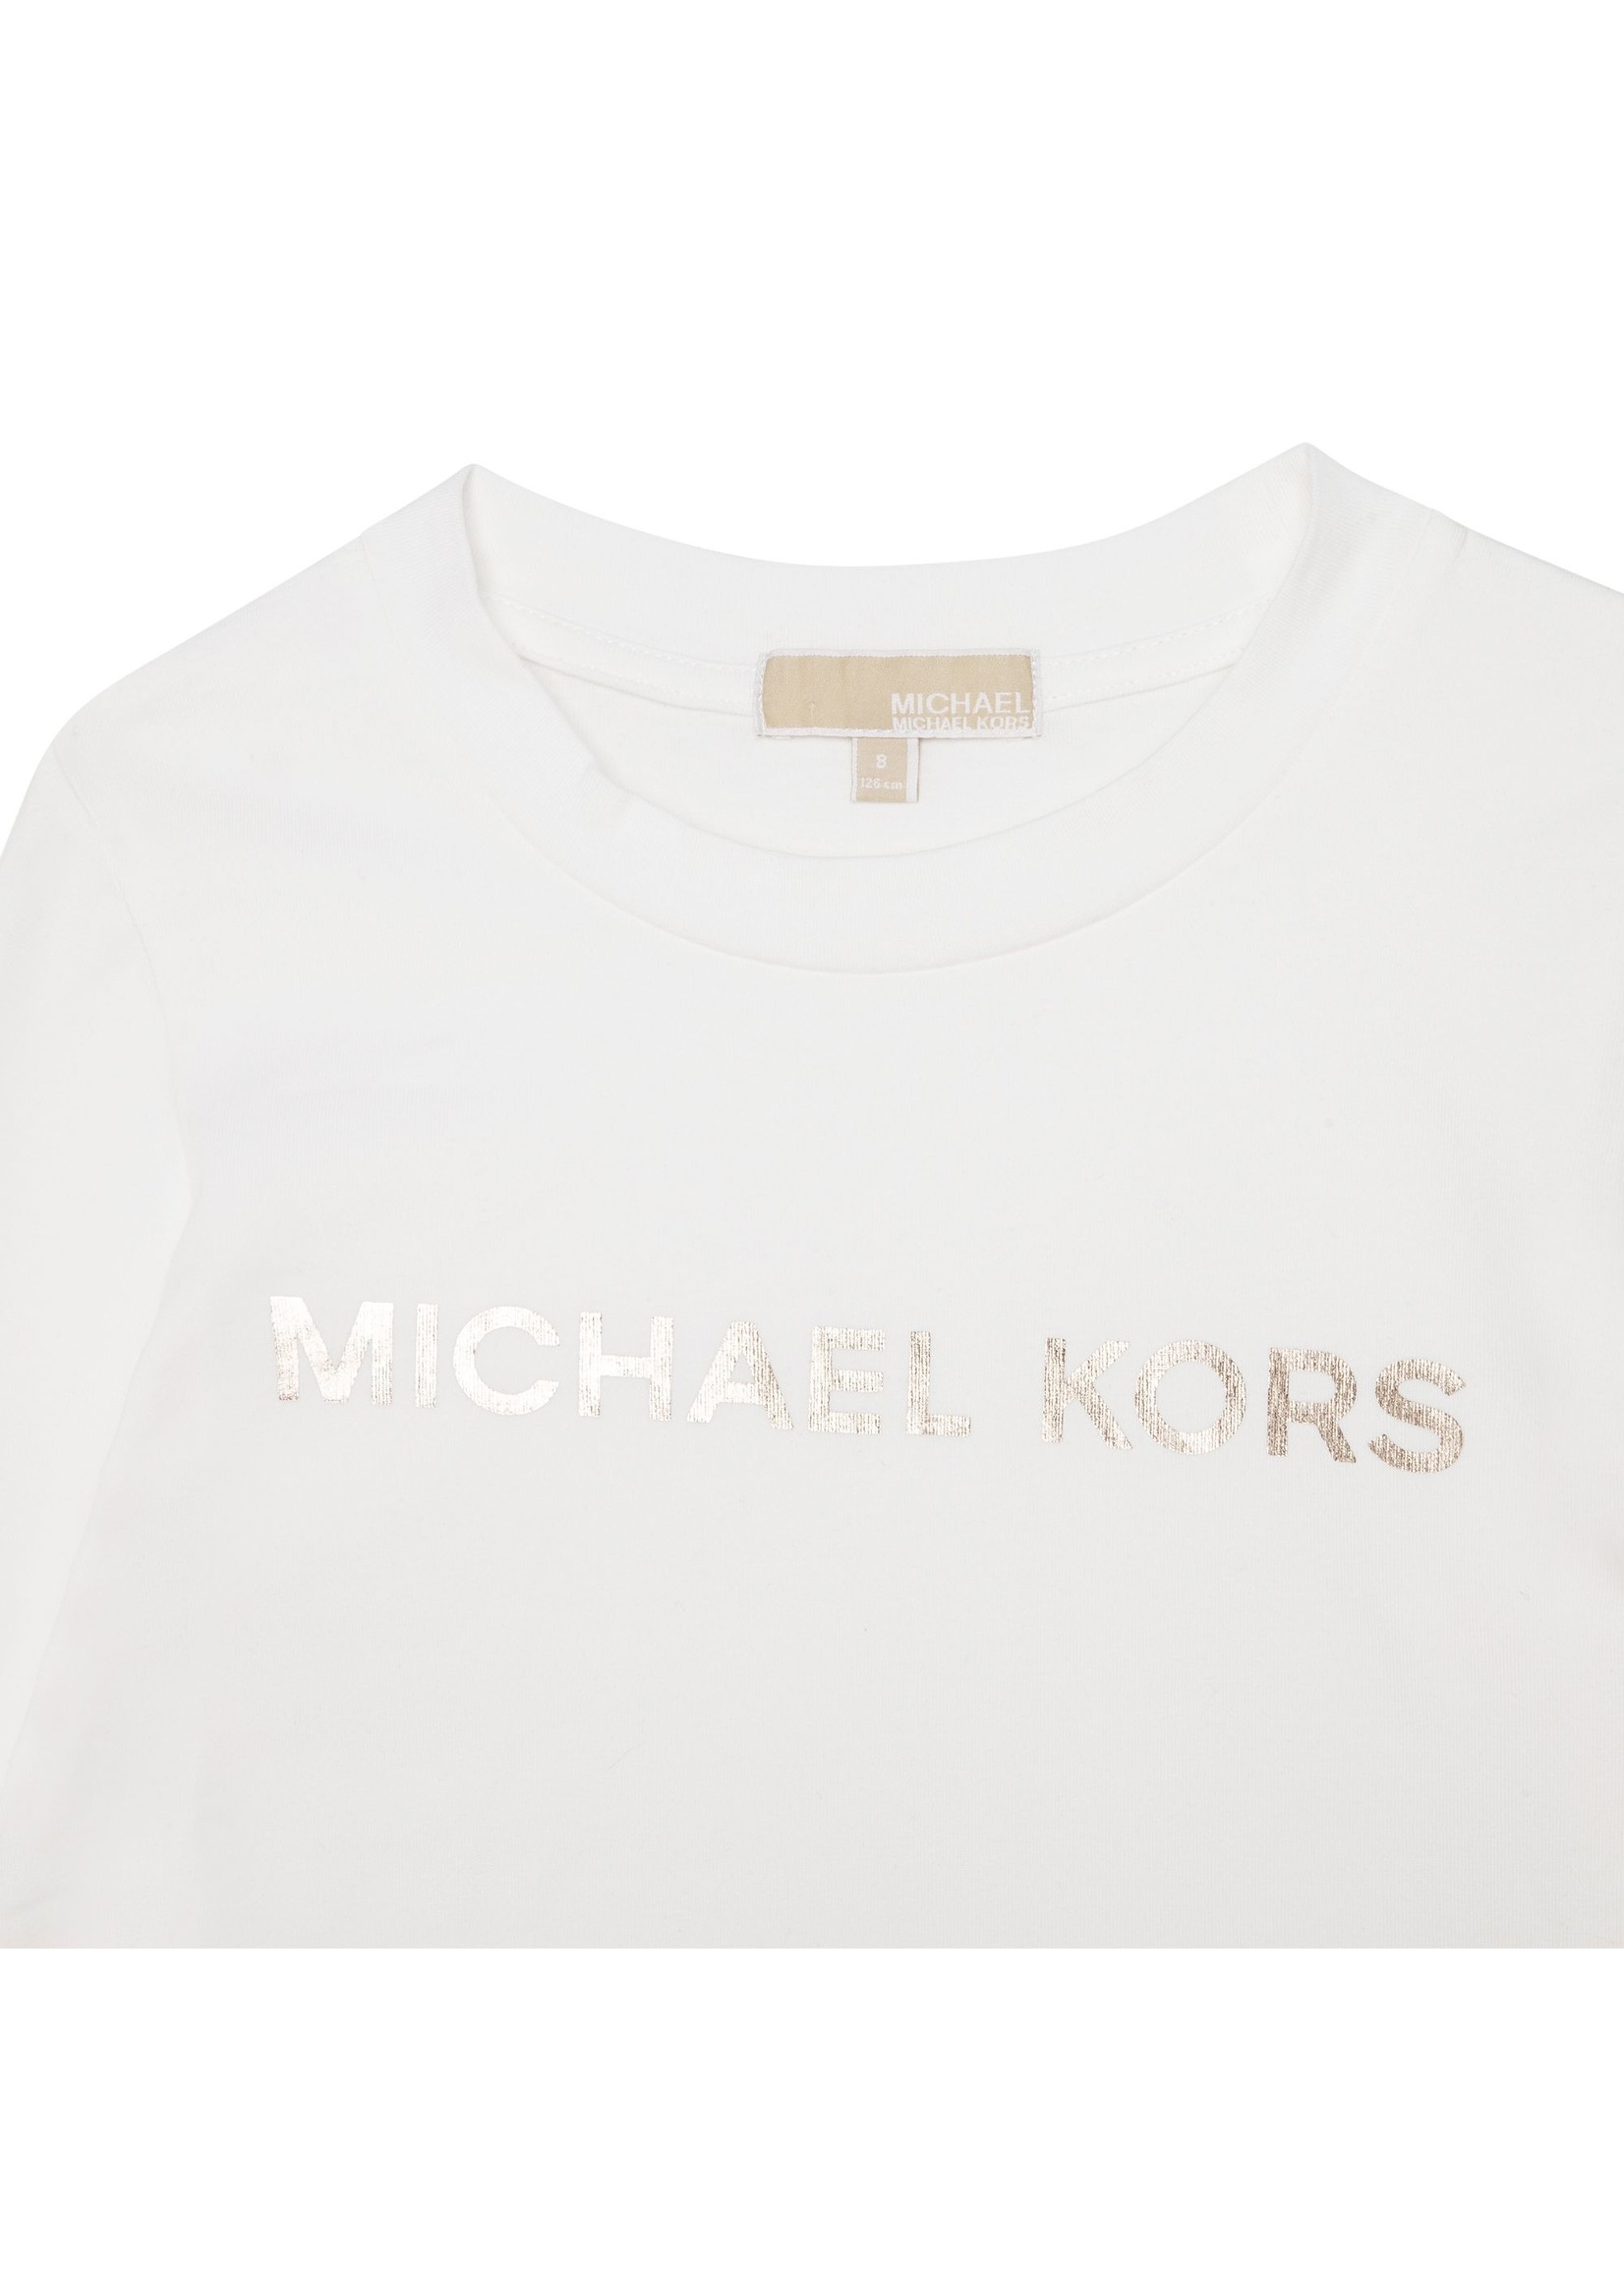 Michael Kors Michael Kors Shirt Off White gold